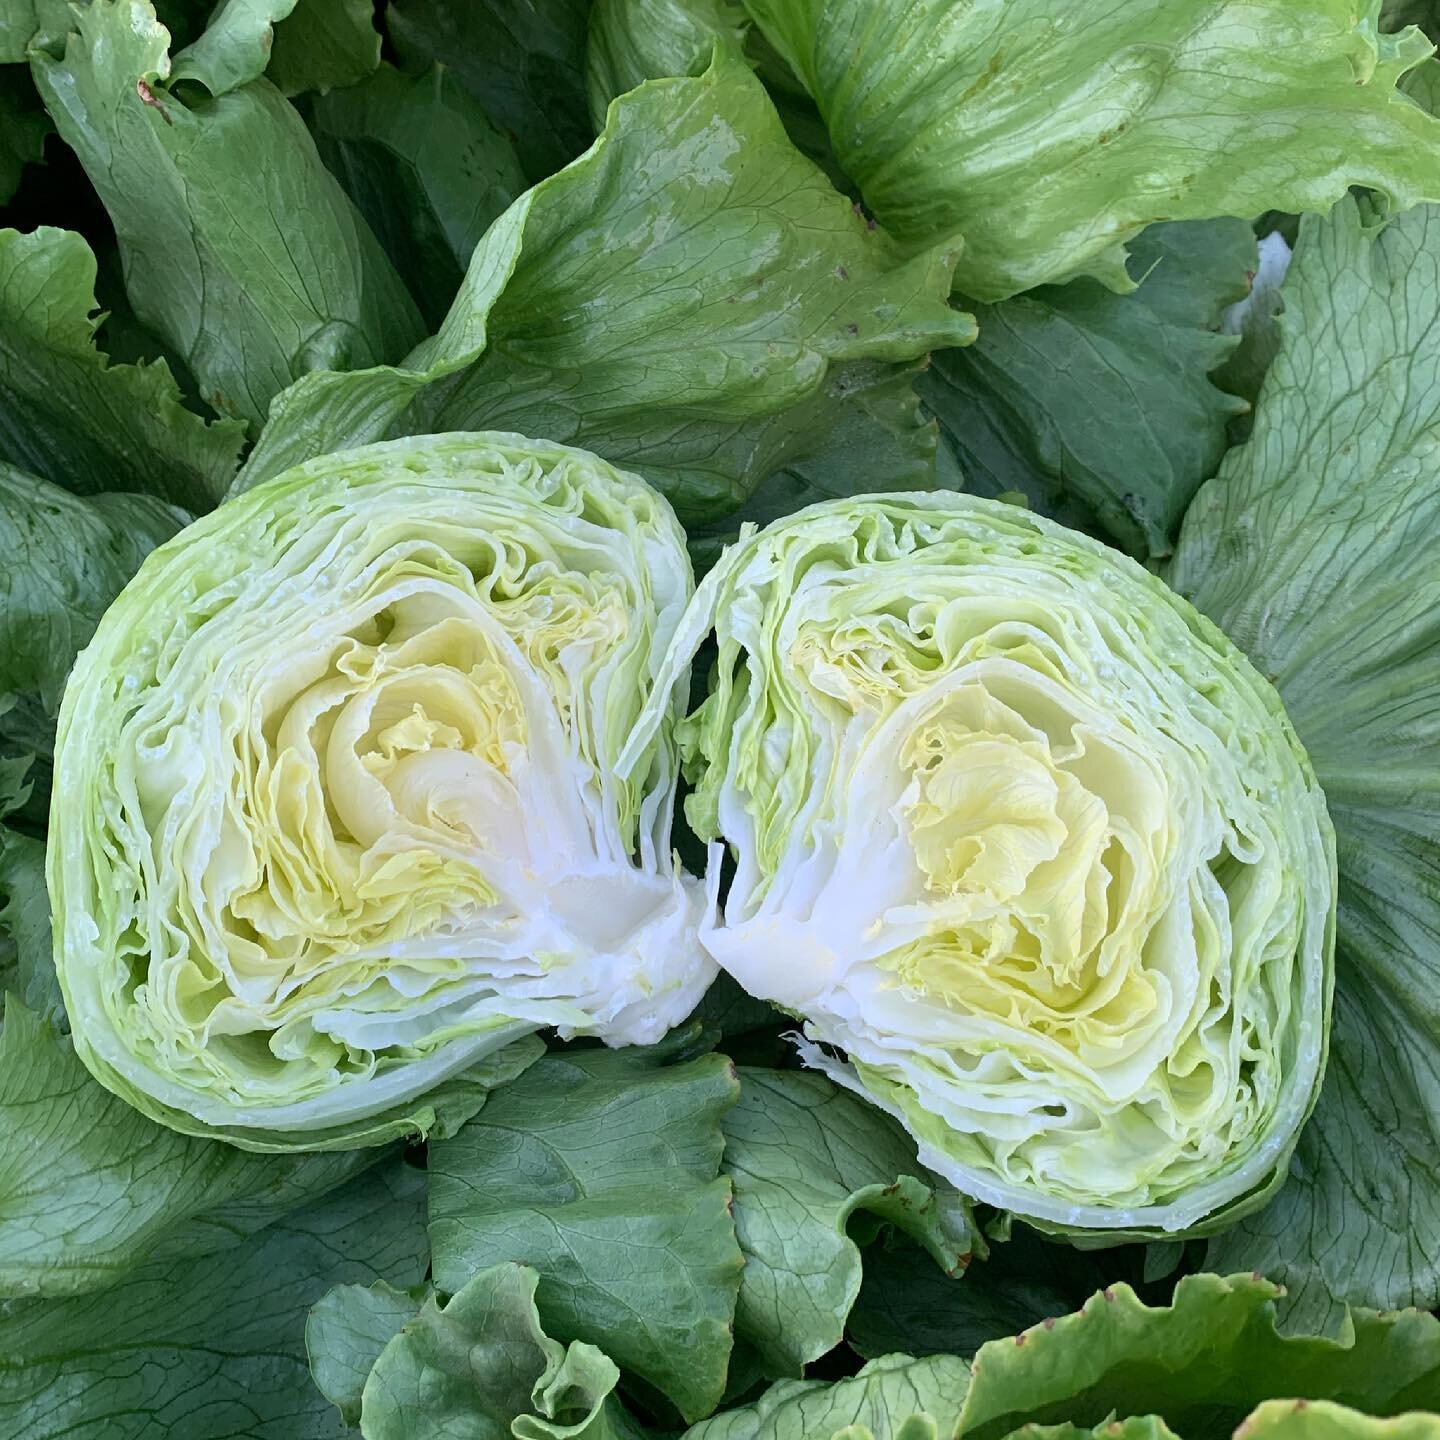 California grown Iceberg Lettuce

 #lettuce #healthyfood #korea #salad #freshfood